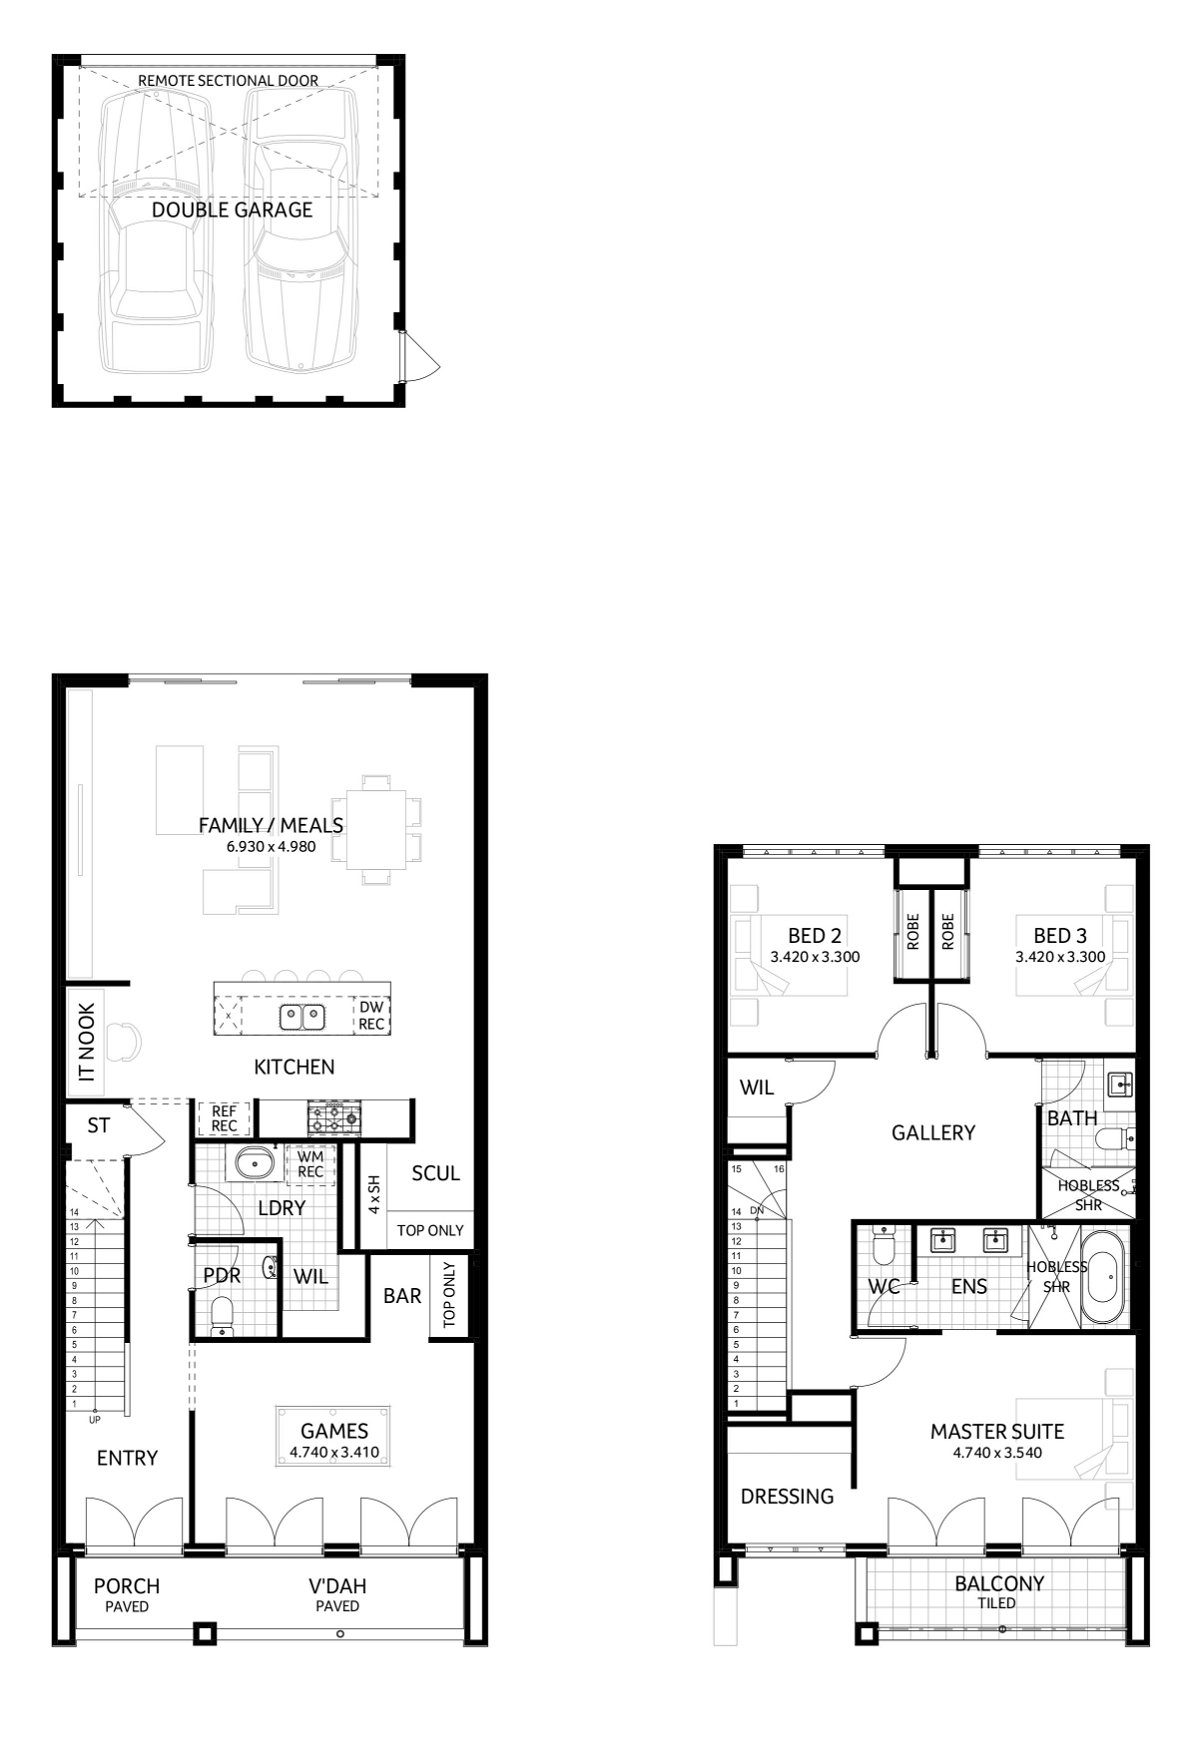 Plunkett Homes - Newcastle | Federation - Floorplan - Newcastle Luxe Federation Marketing Plan A3Jpg